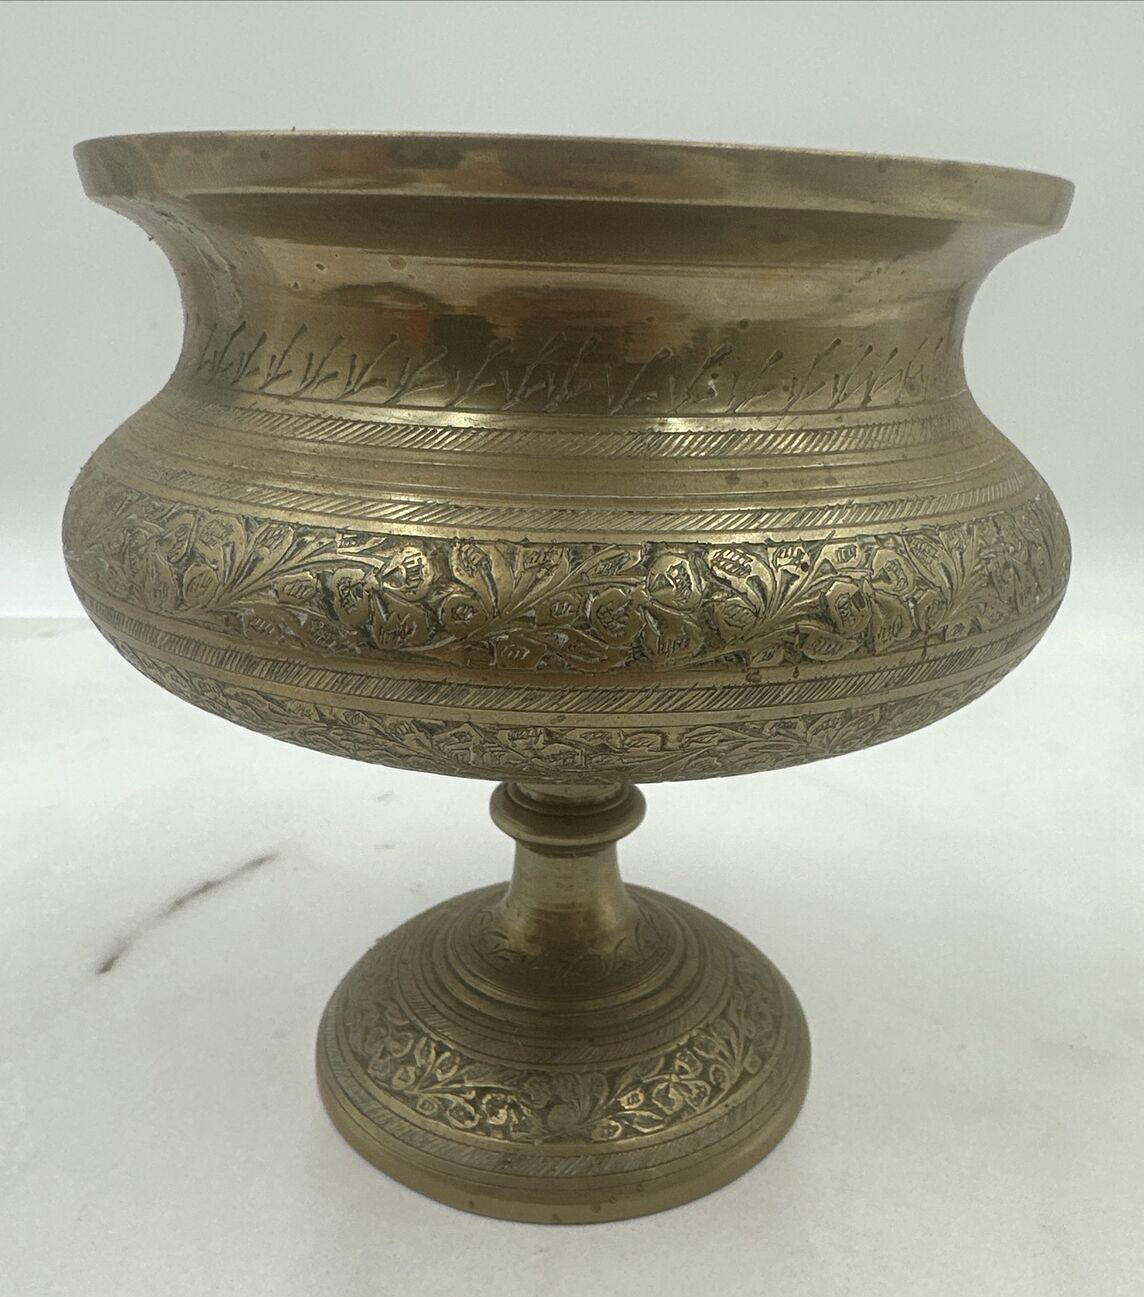 Vintage Brass Pedestal Planter Pot Bowl with Elaborate Engraving